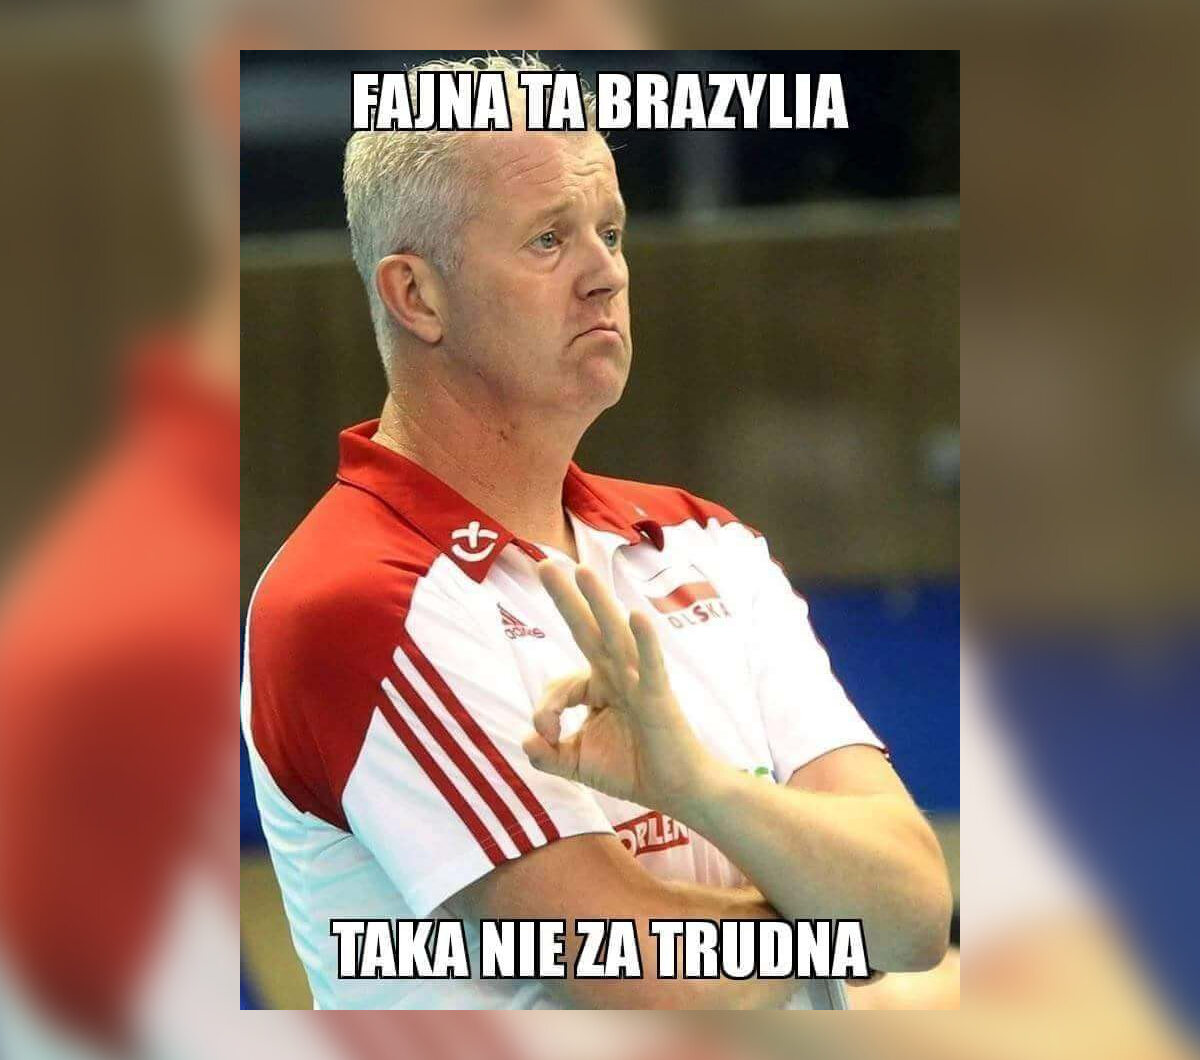 Mem po meczu Polska-Brazylia 